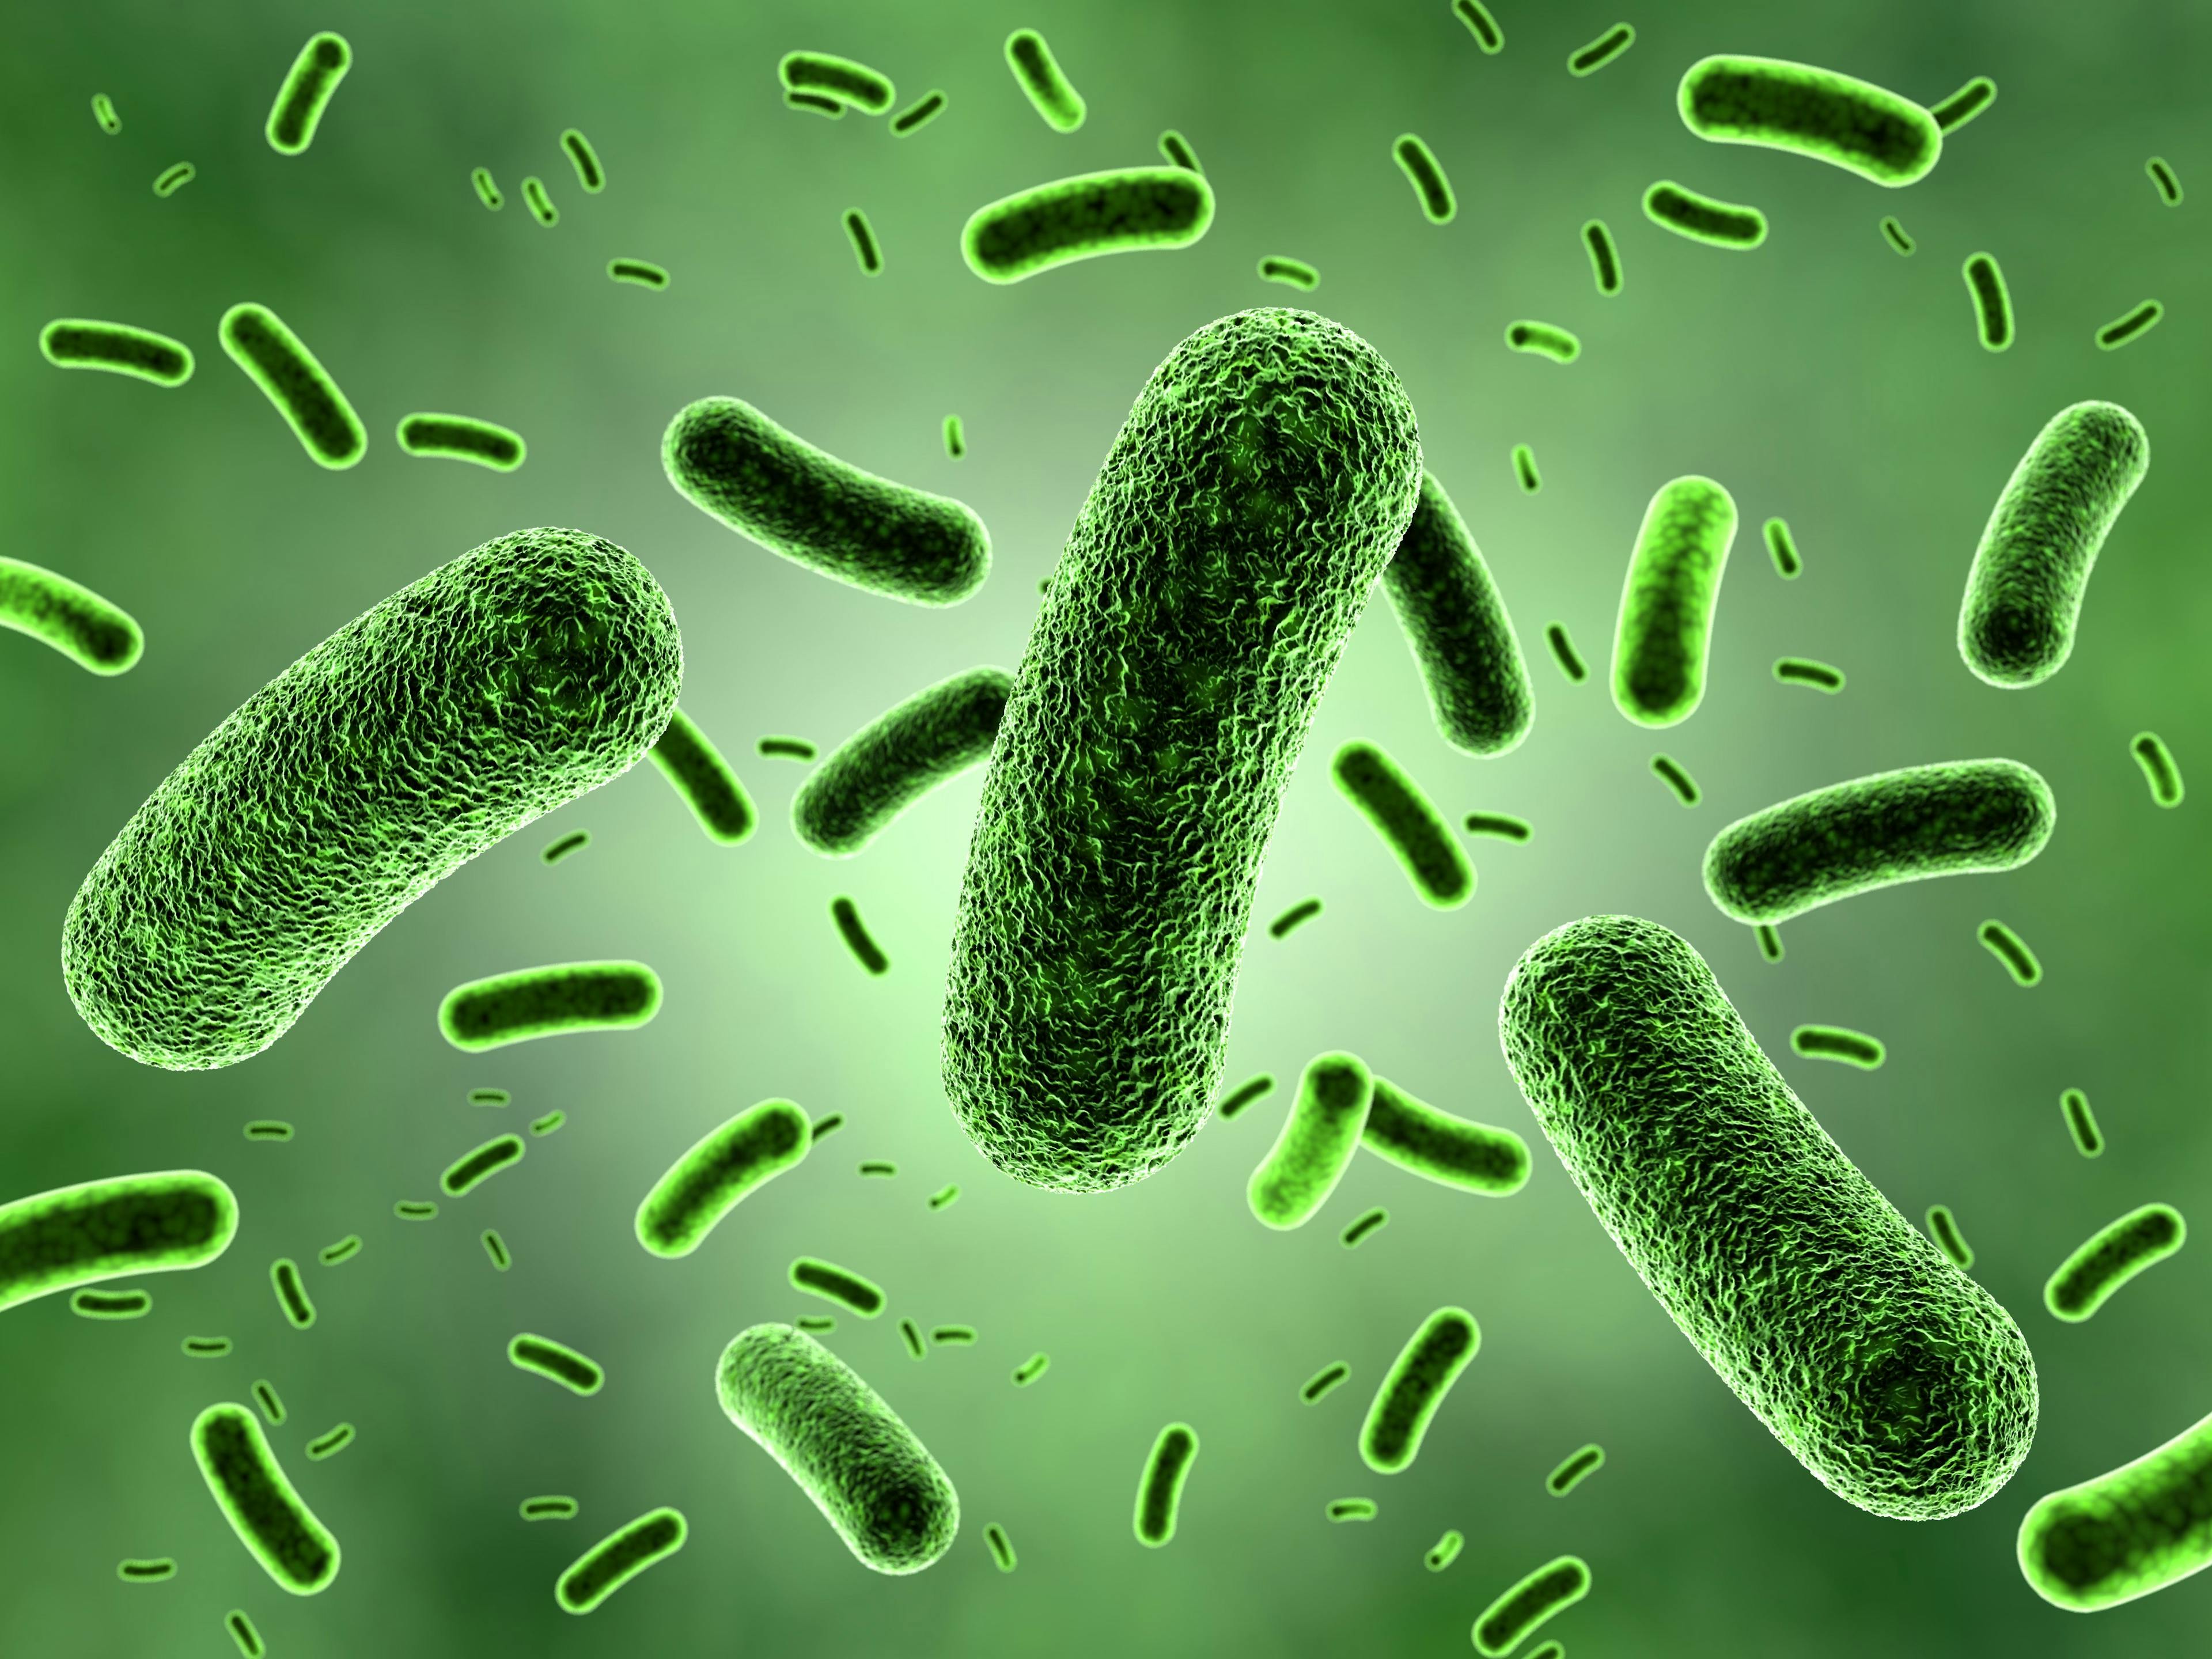 Green Bacteria Colony | Image Credit: © zuki70 - stock.adobe.com